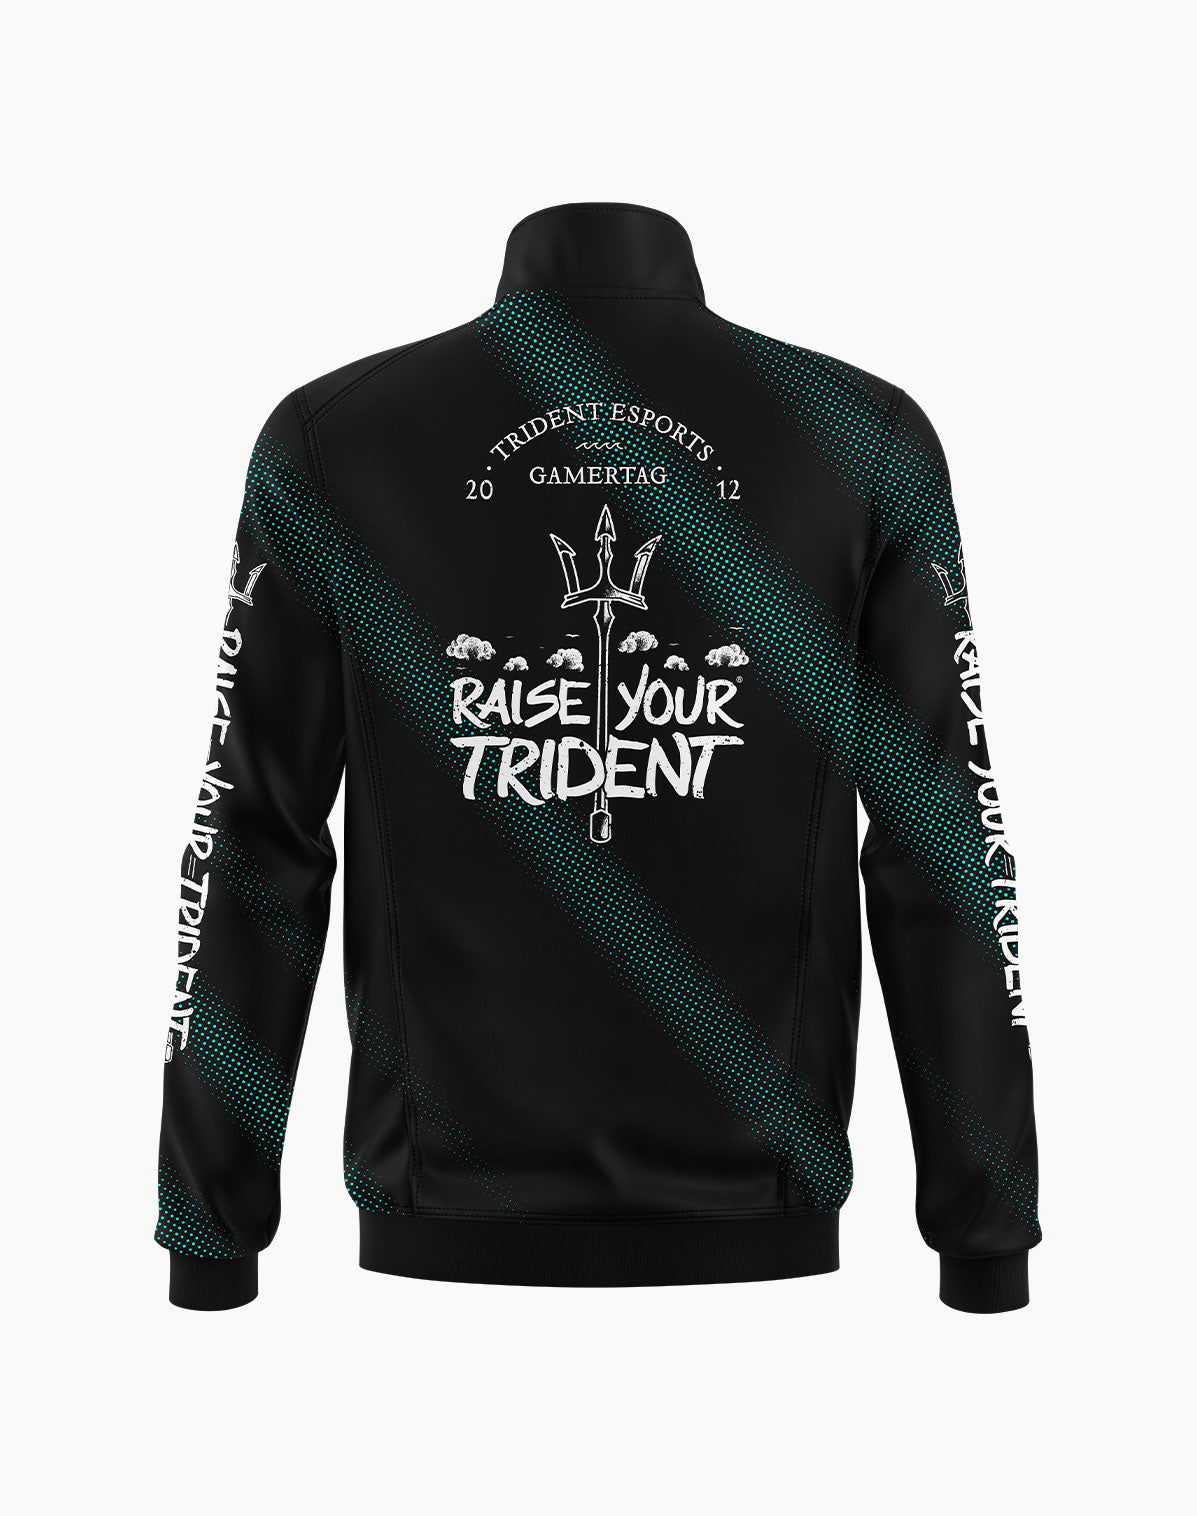 Trident "BLACK" PRO Jacket